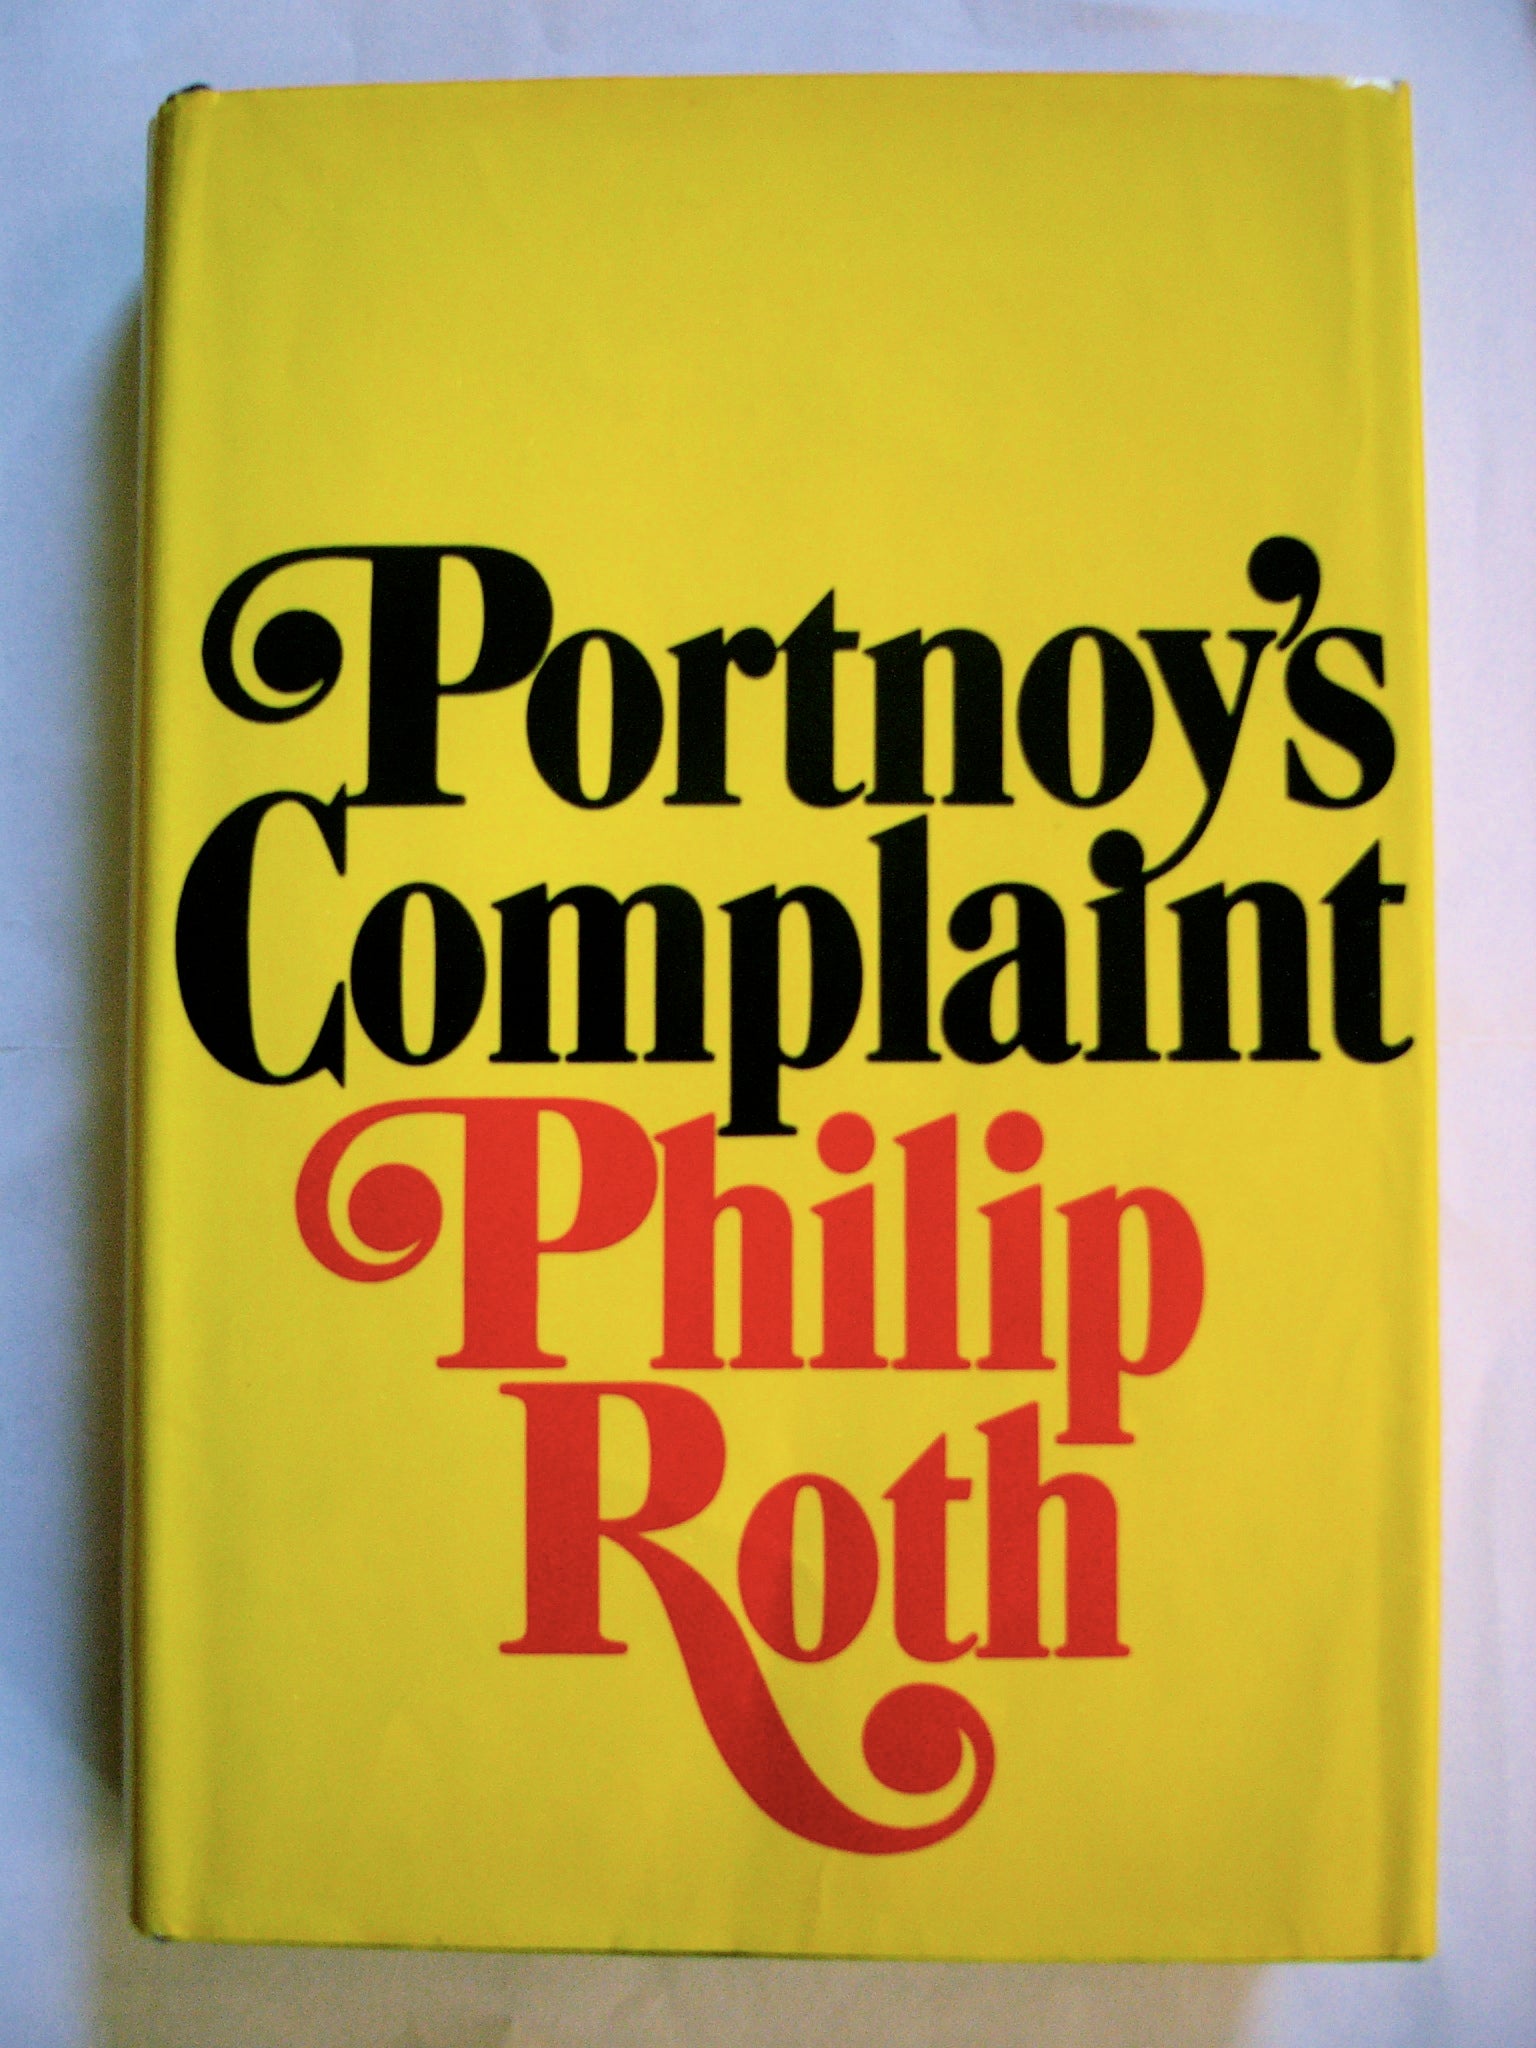 Roth’s ‘Portnoy’s Complaint’ is famous for its graphic descriptions of male masturbation (Flickr/Matt &amp; Megan)